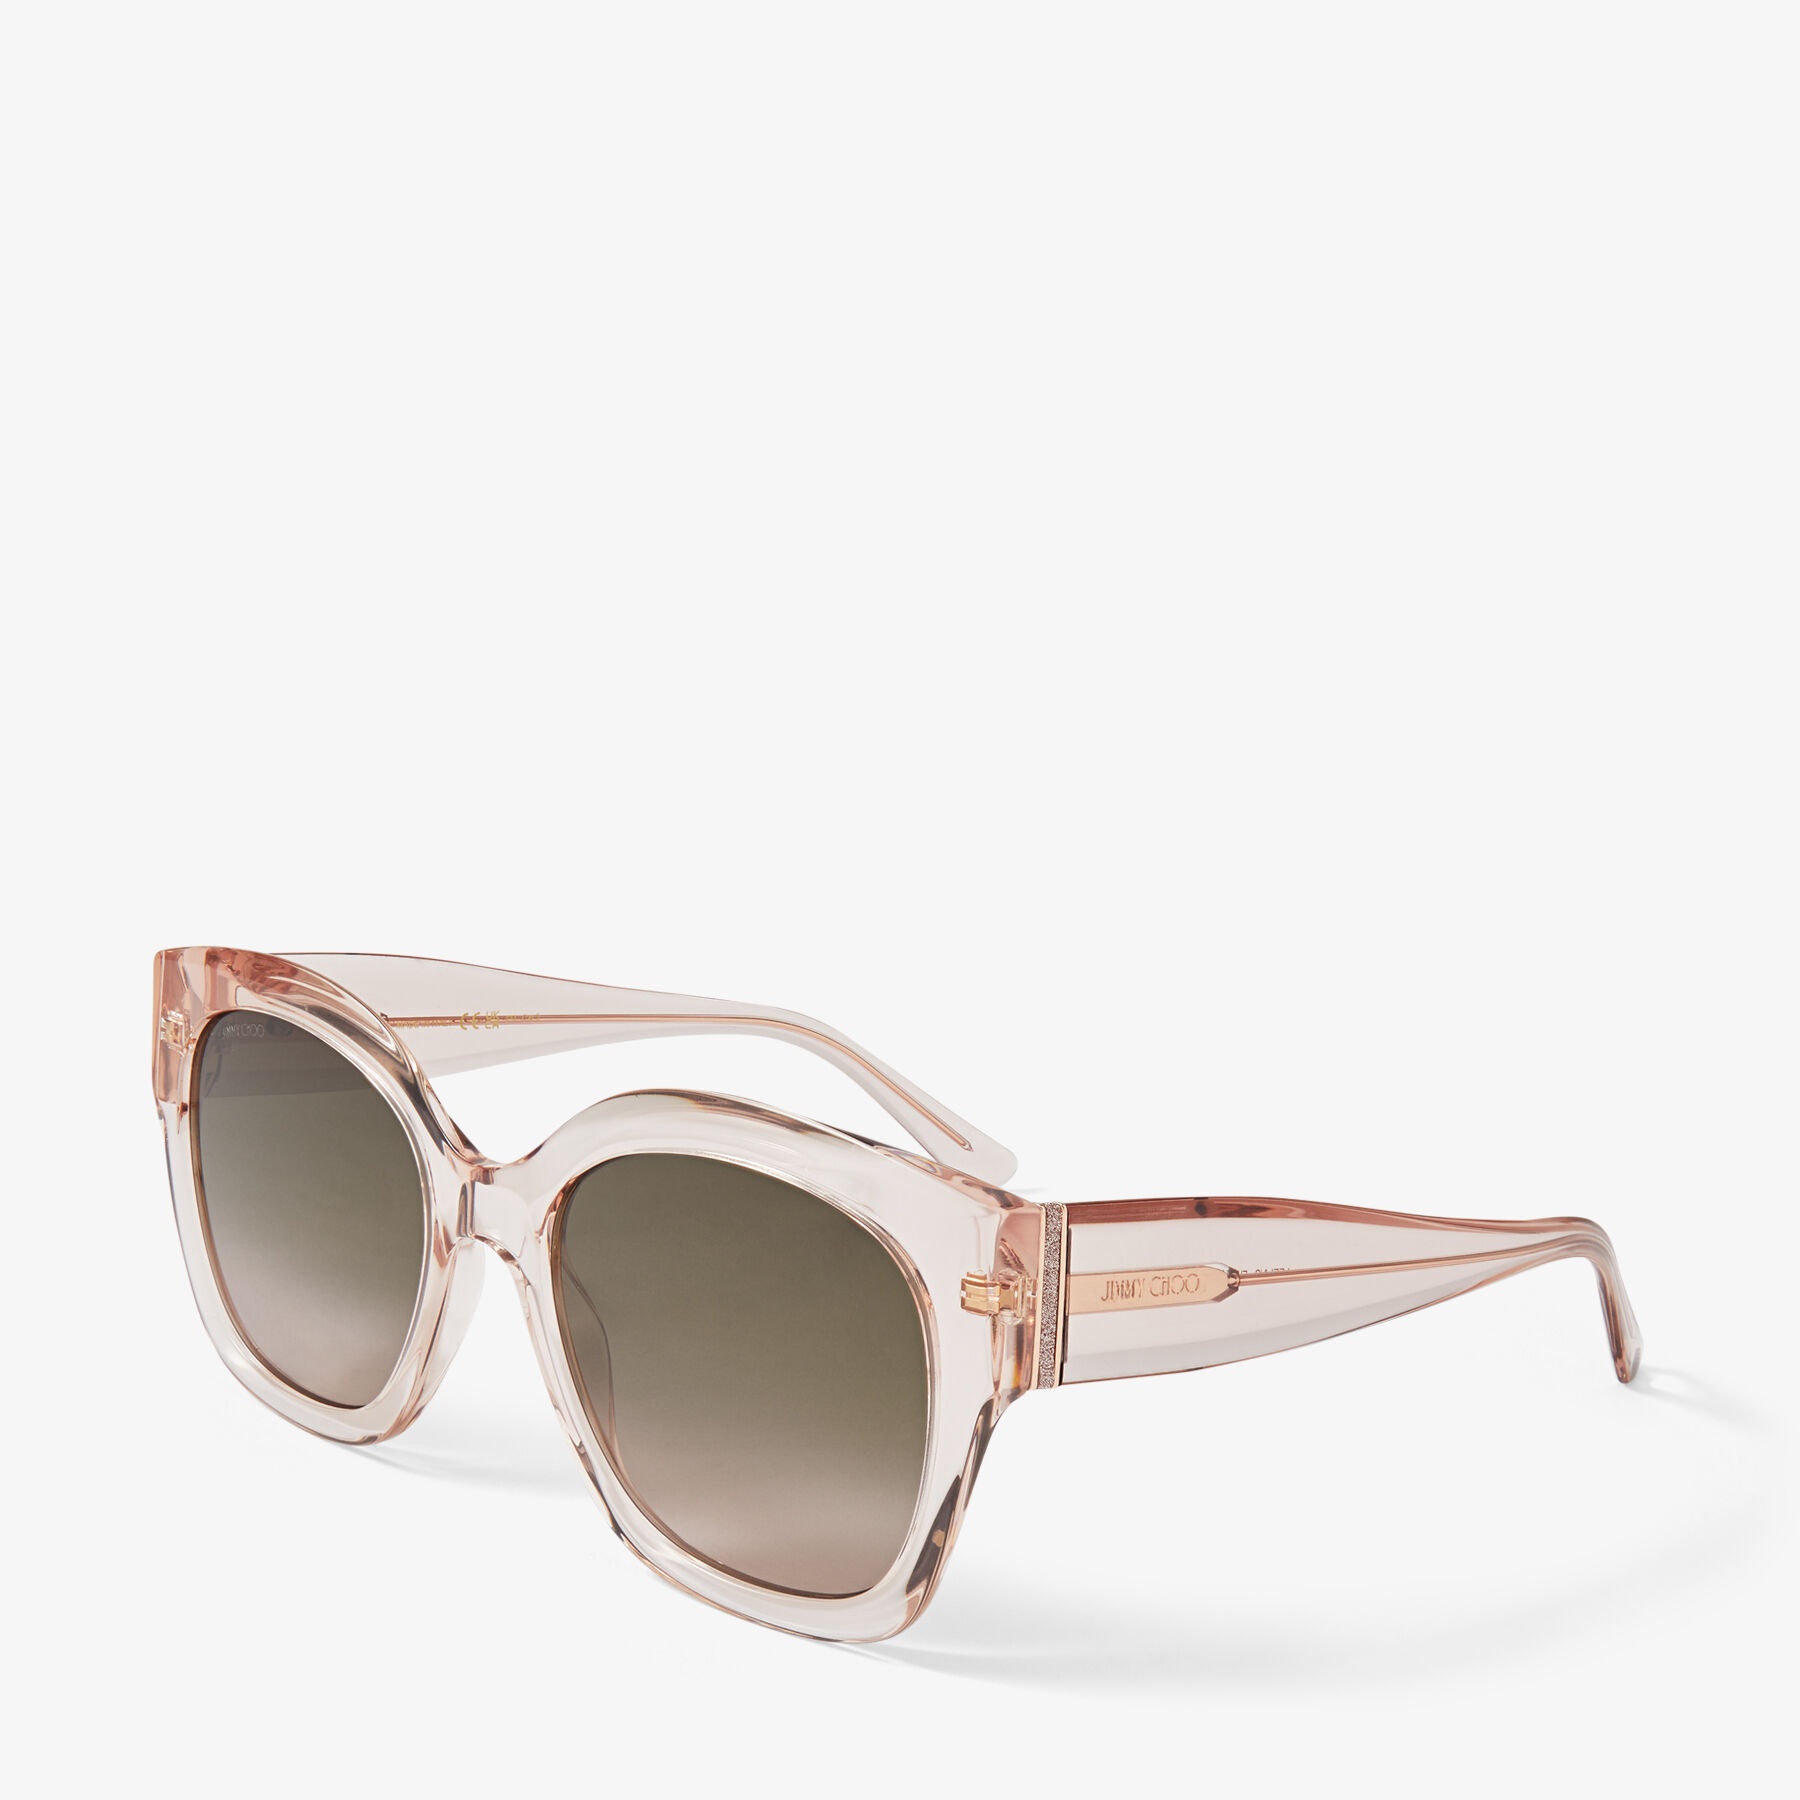 Leela
Nude Square Frame Sunglasses with Glitter - 3